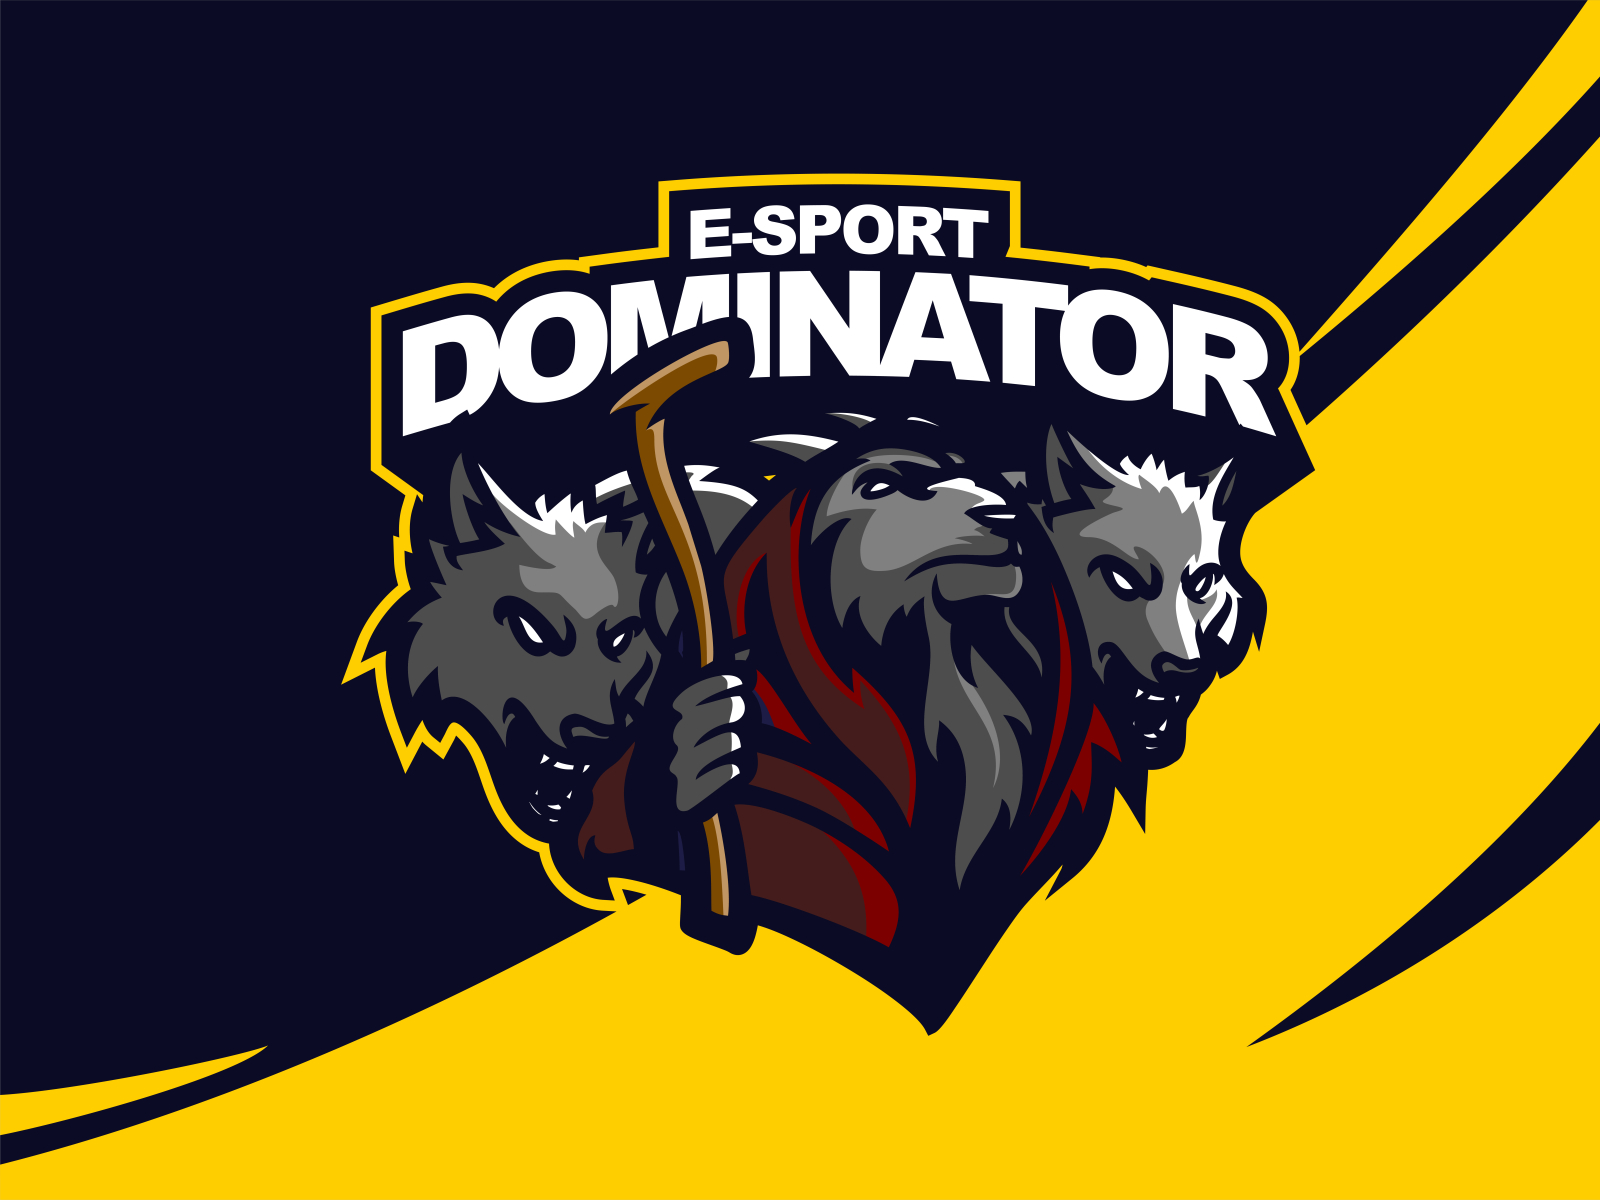 Lord Dominator Logo by TeaTimeDuo on DeviantArt